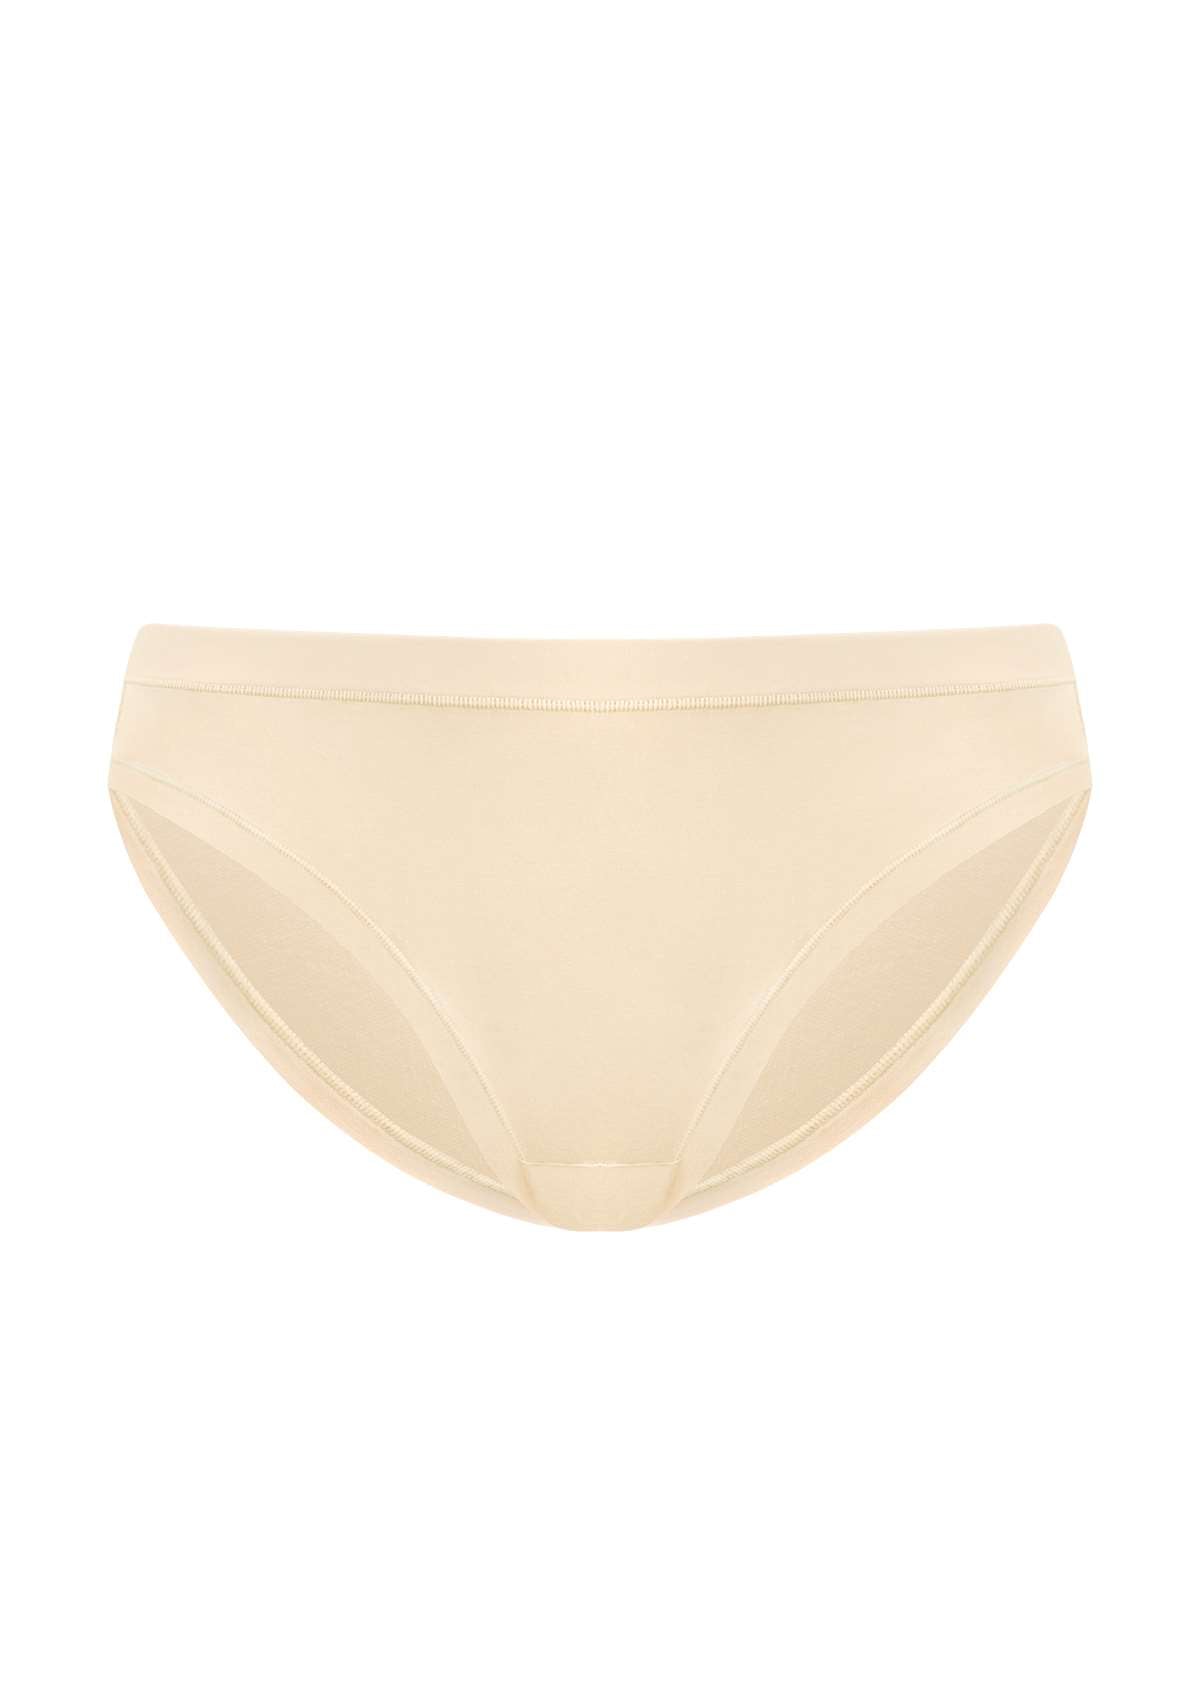 HSIA Comfort Stretch Cotton Everyday Bikini Panty - L / Beige